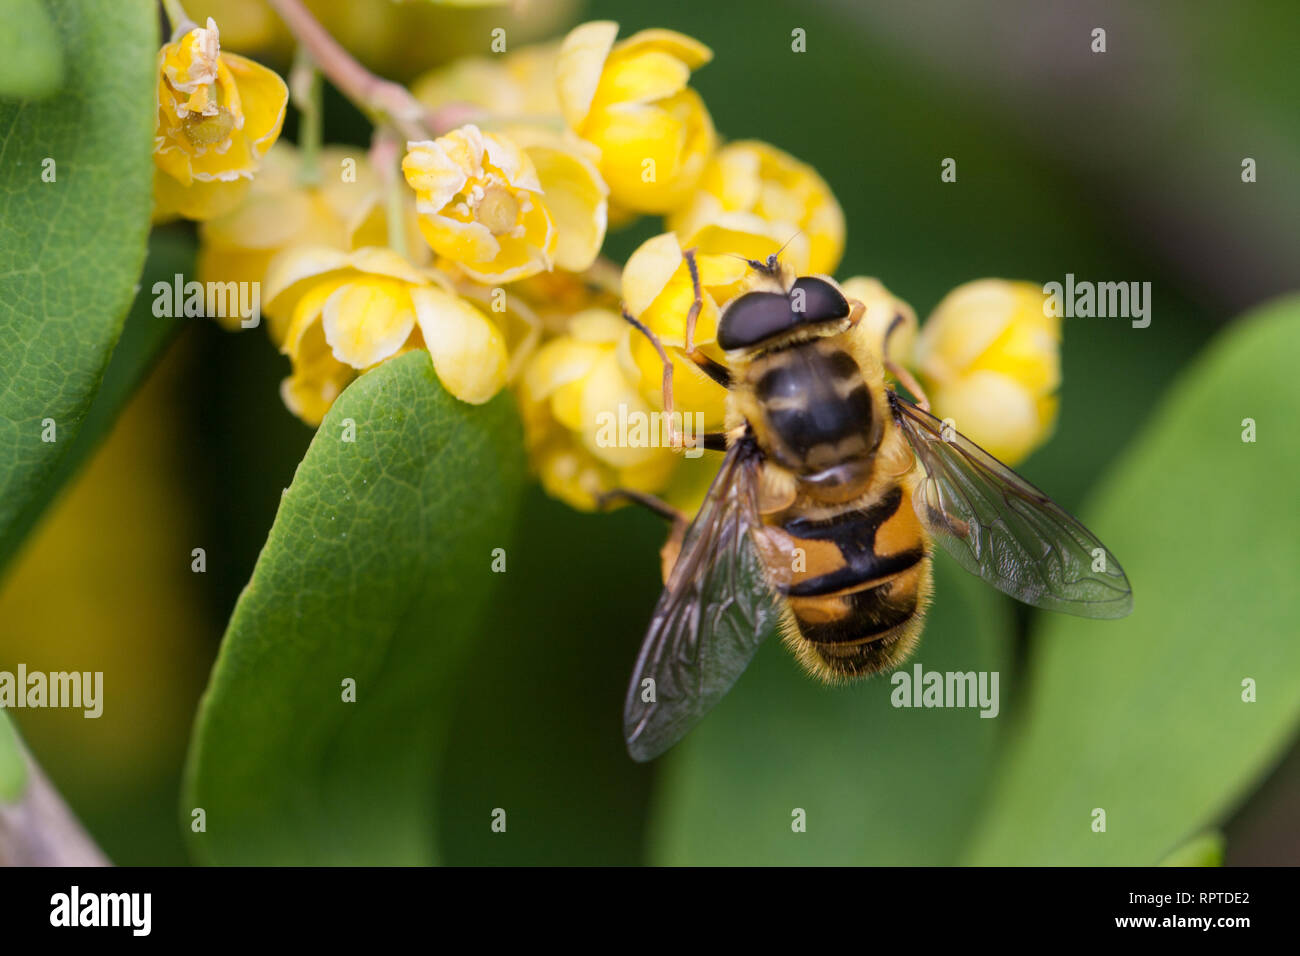 Biene auf die blühende Berberitze Berberis Amurensis. Selektiver Fokus, flacher DOF Stockfoto